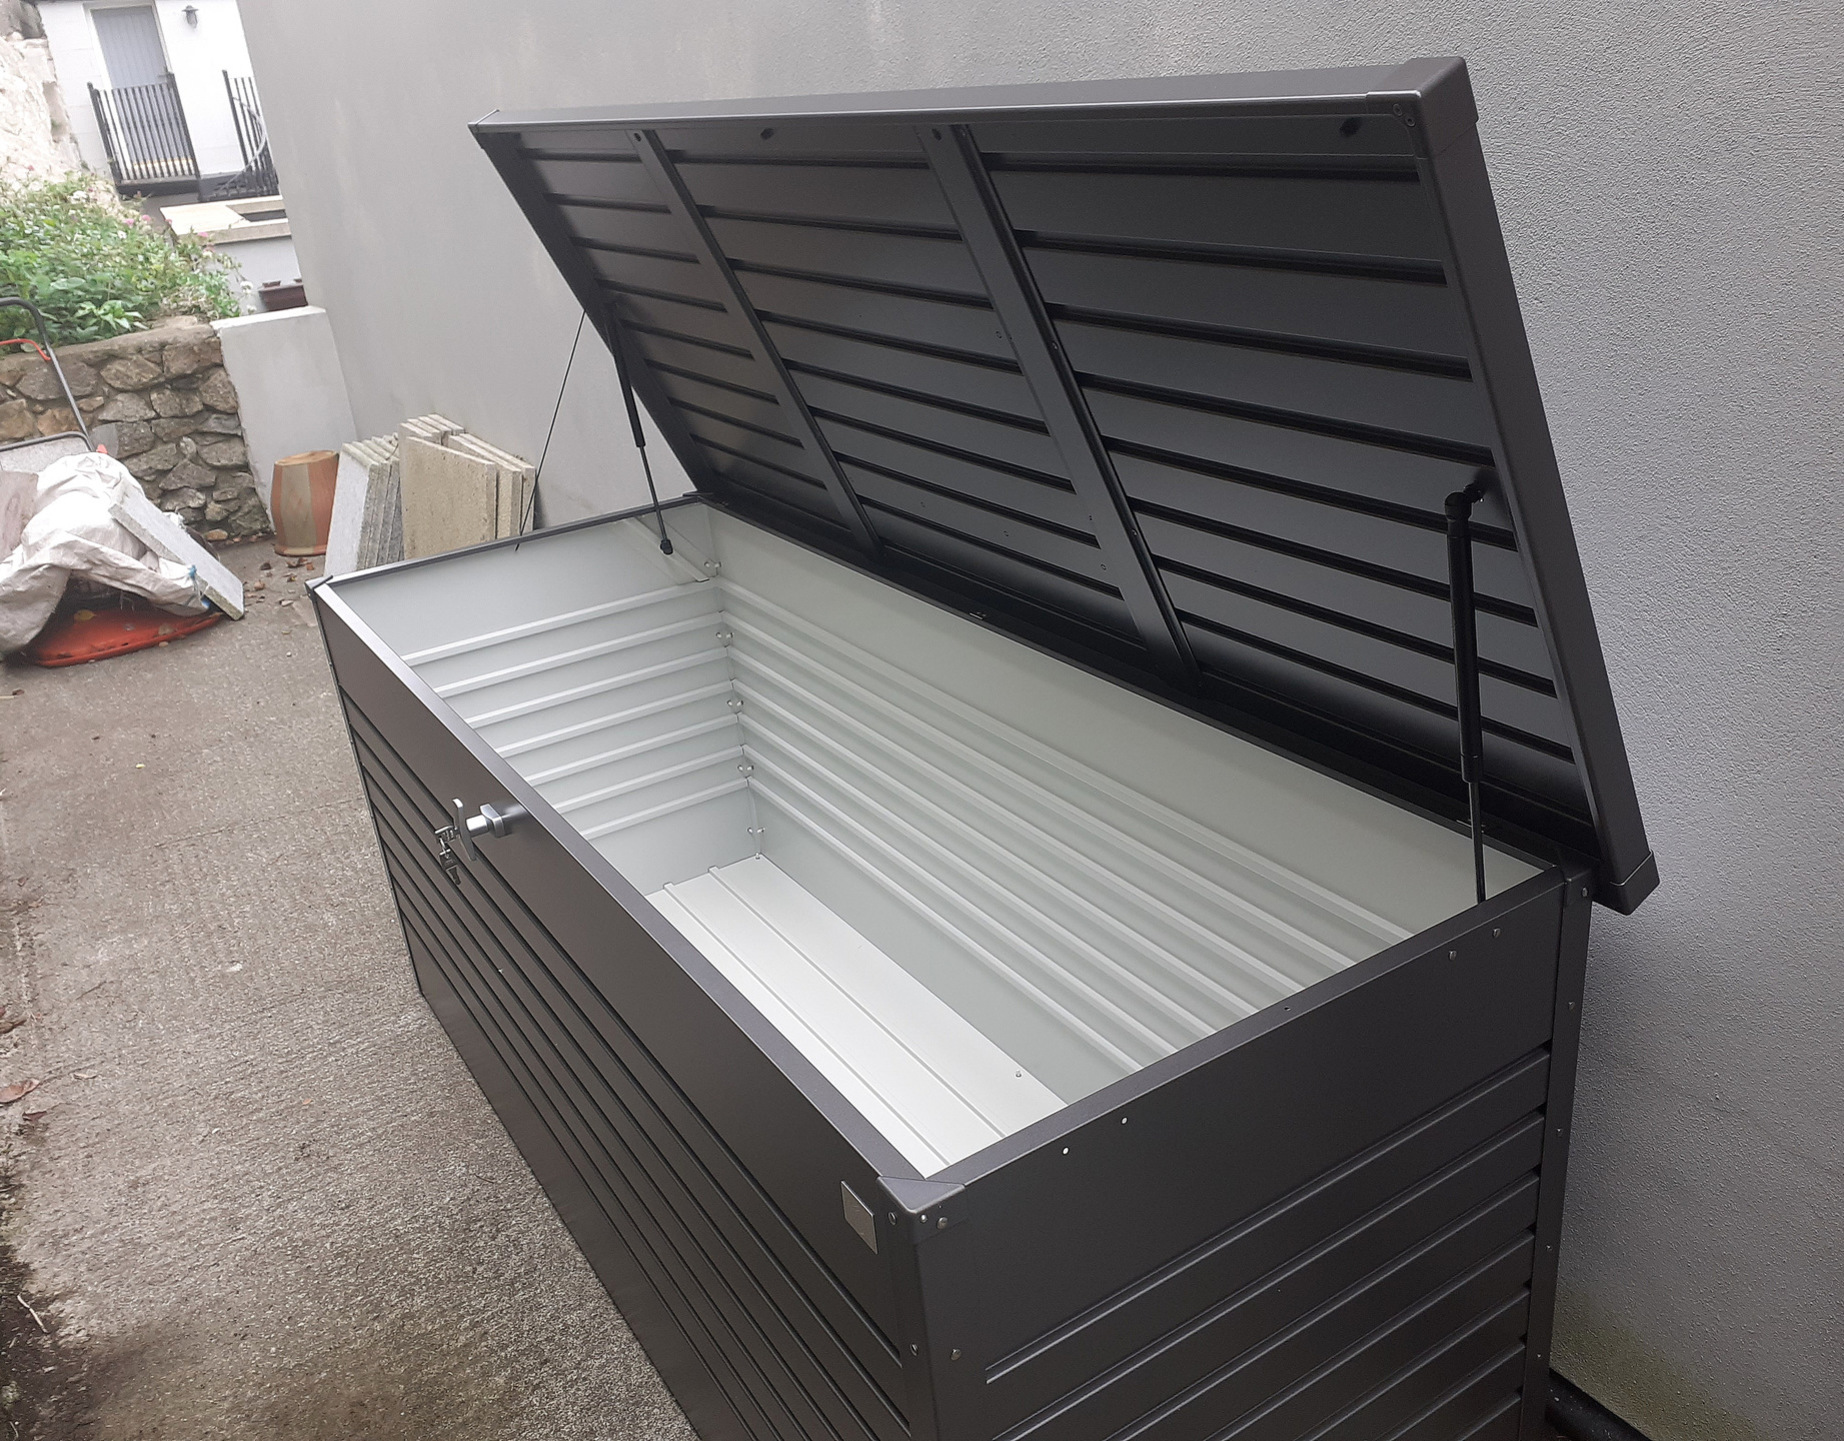 Biohort LeisureTime Box Size 200 in metallic dark grey | Supplied + Fitted in Dalkey, Co Dublin